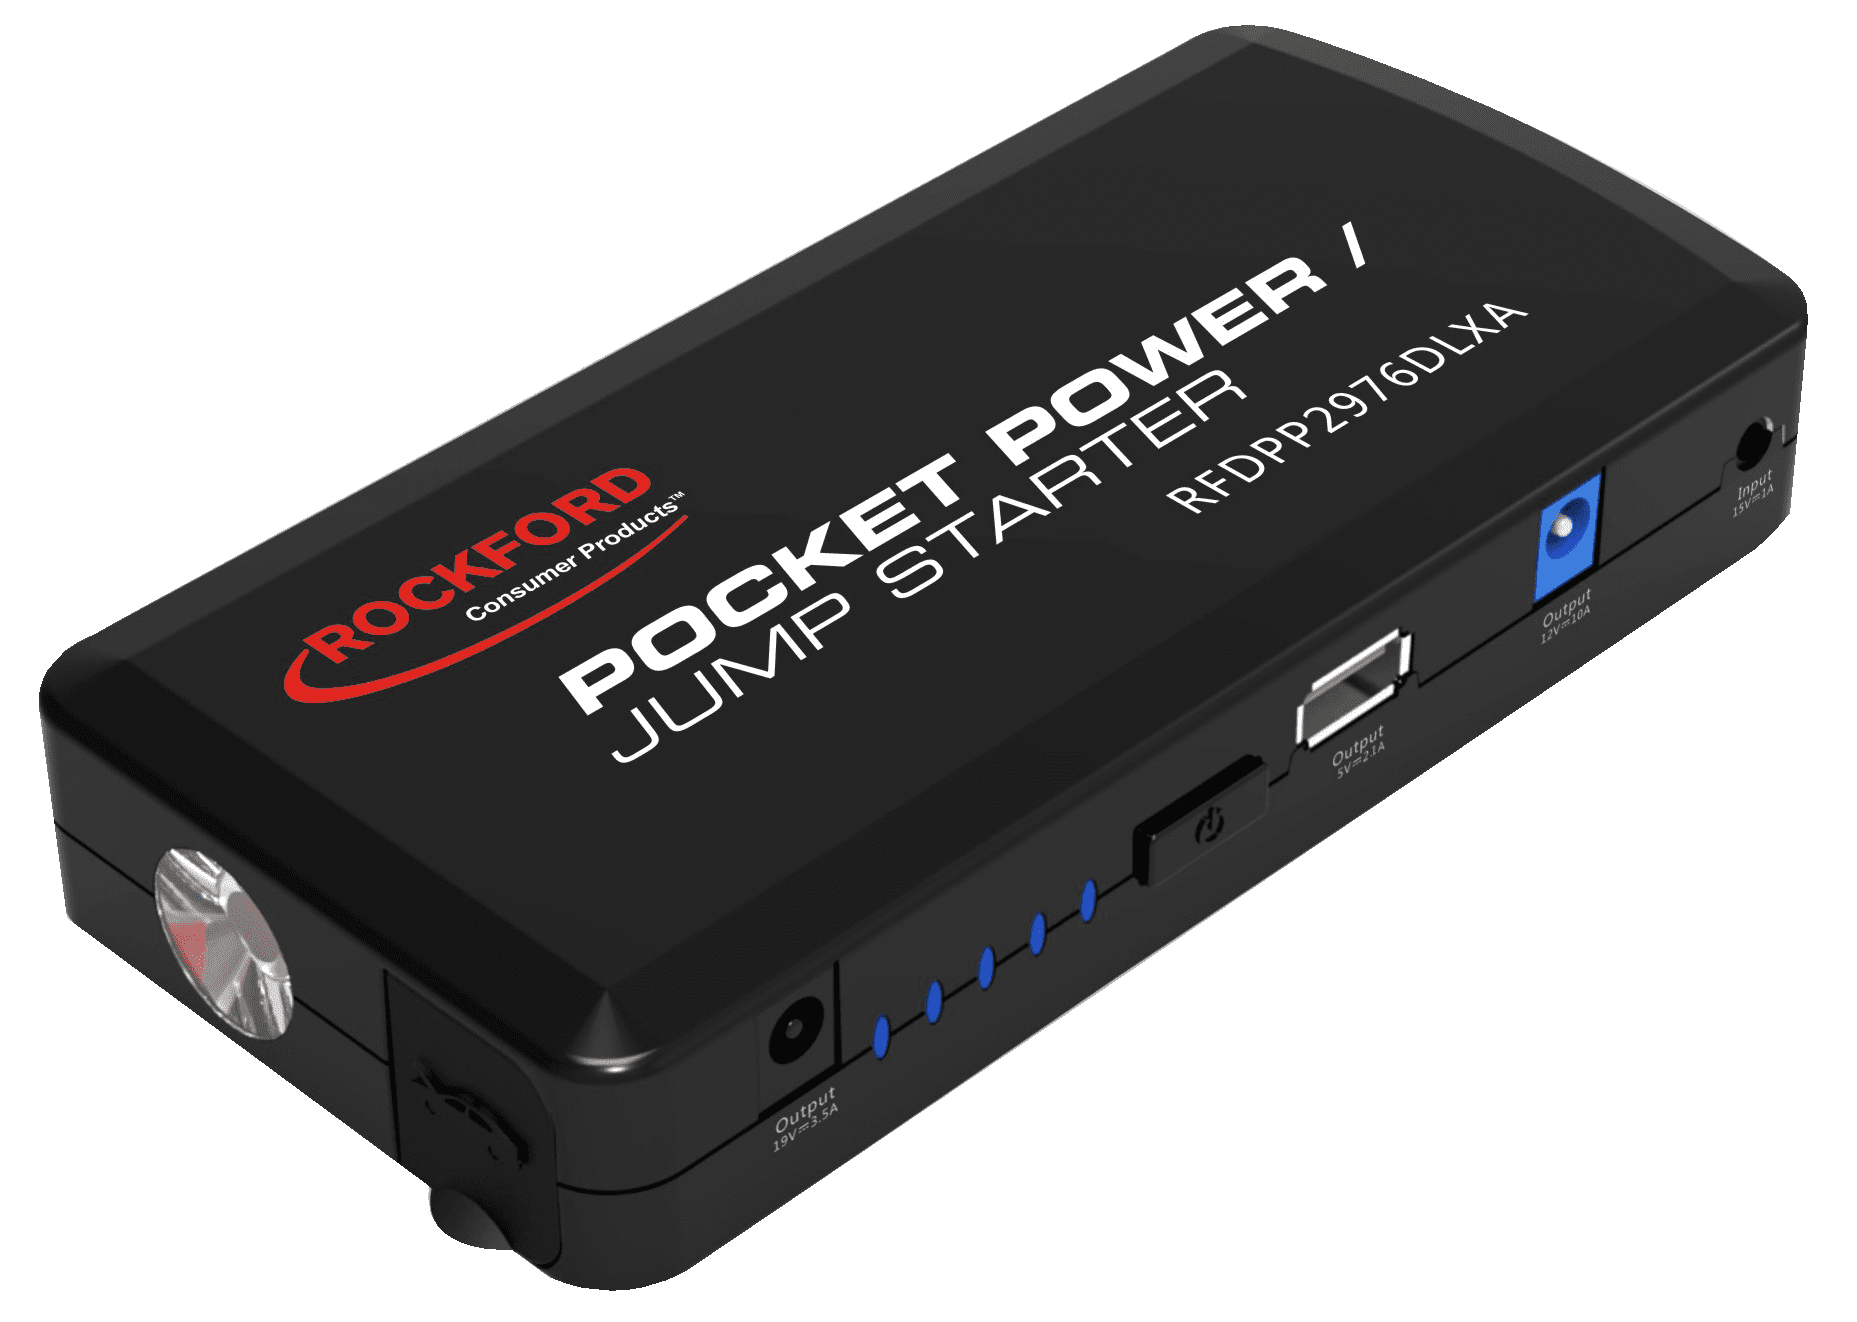 Rockford Pocket Power Jump Starter and Power Bank 